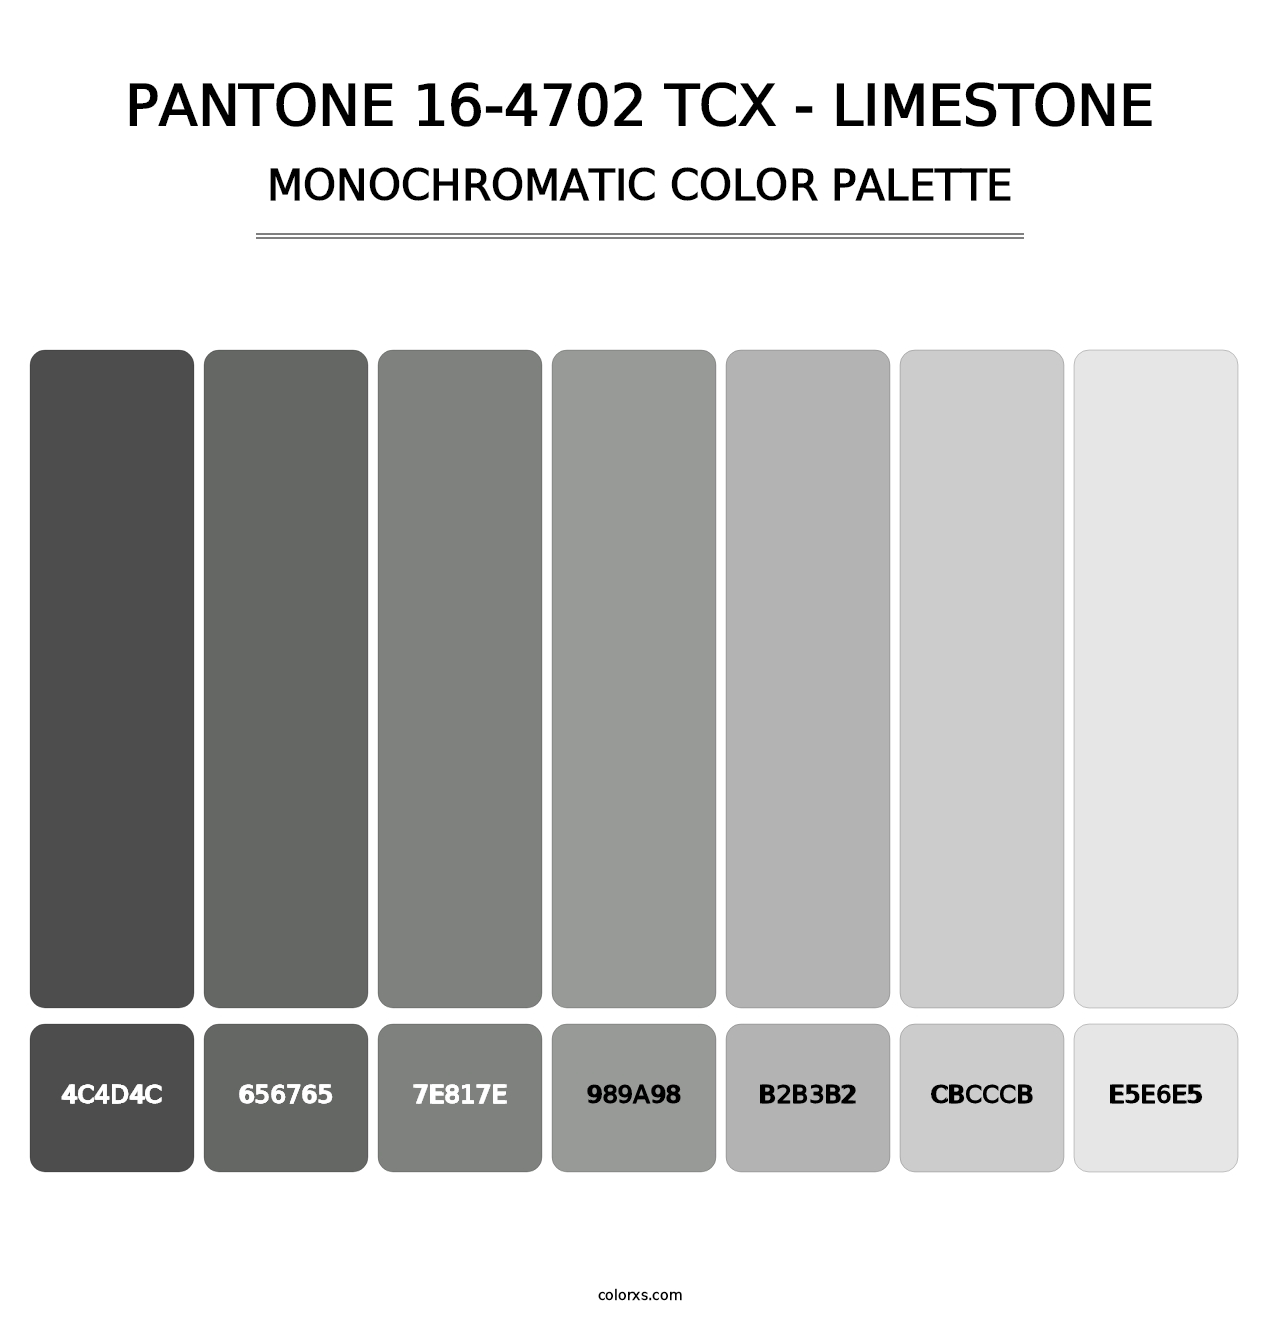 PANTONE 16-4702 TCX - Limestone - Monochromatic Color Palette